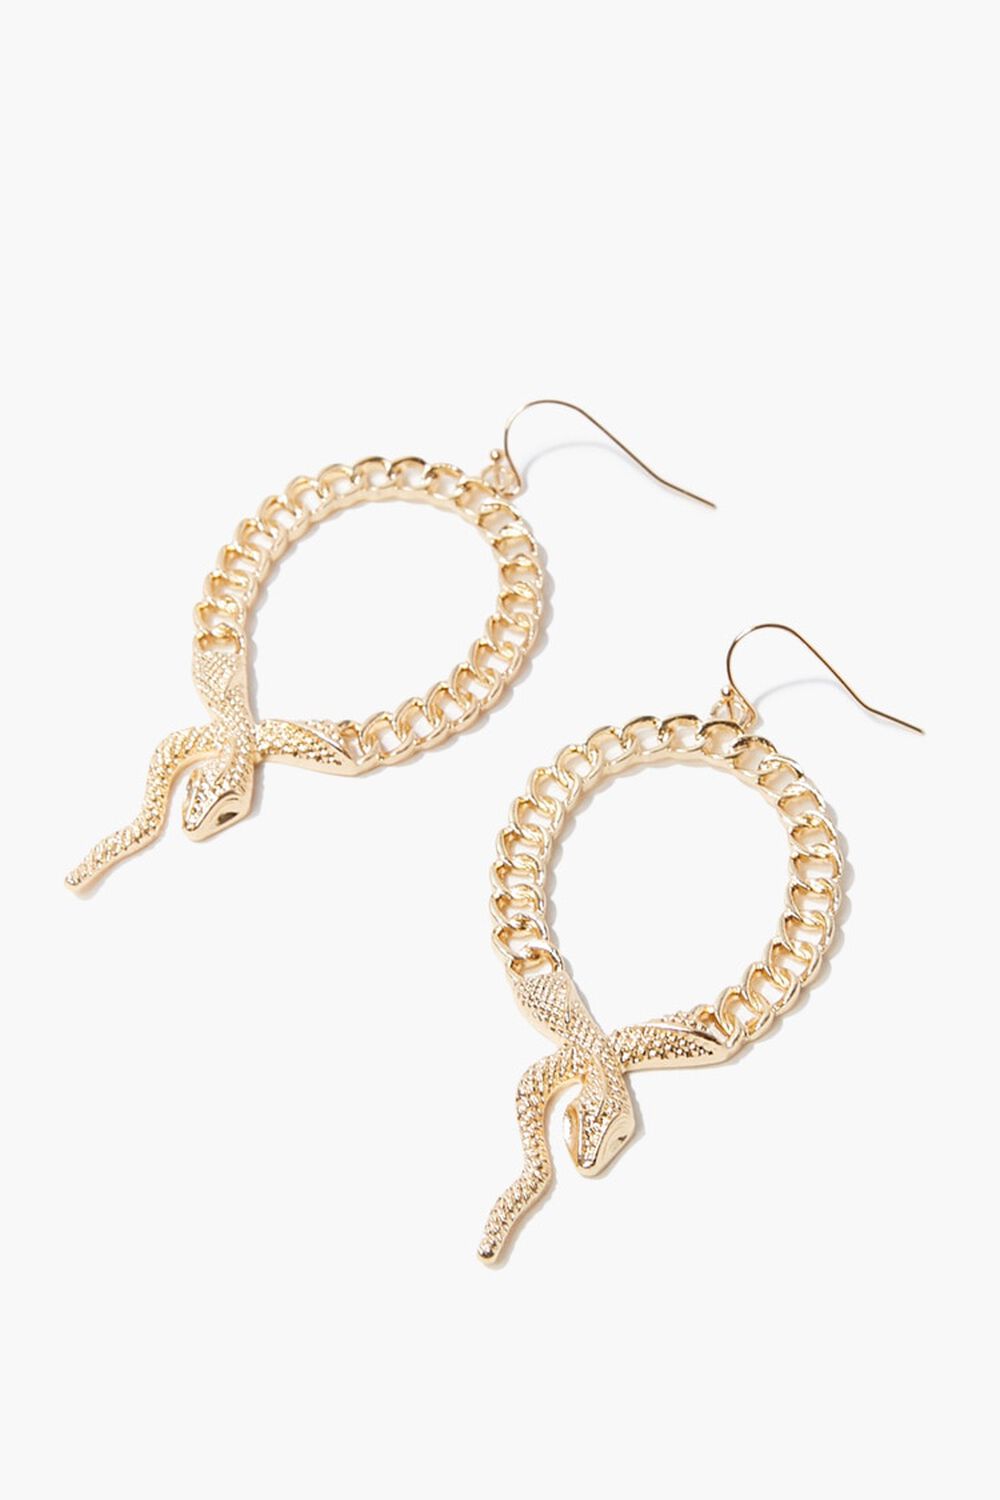 GOLD Snake Pendant Drop Earrings, image 1